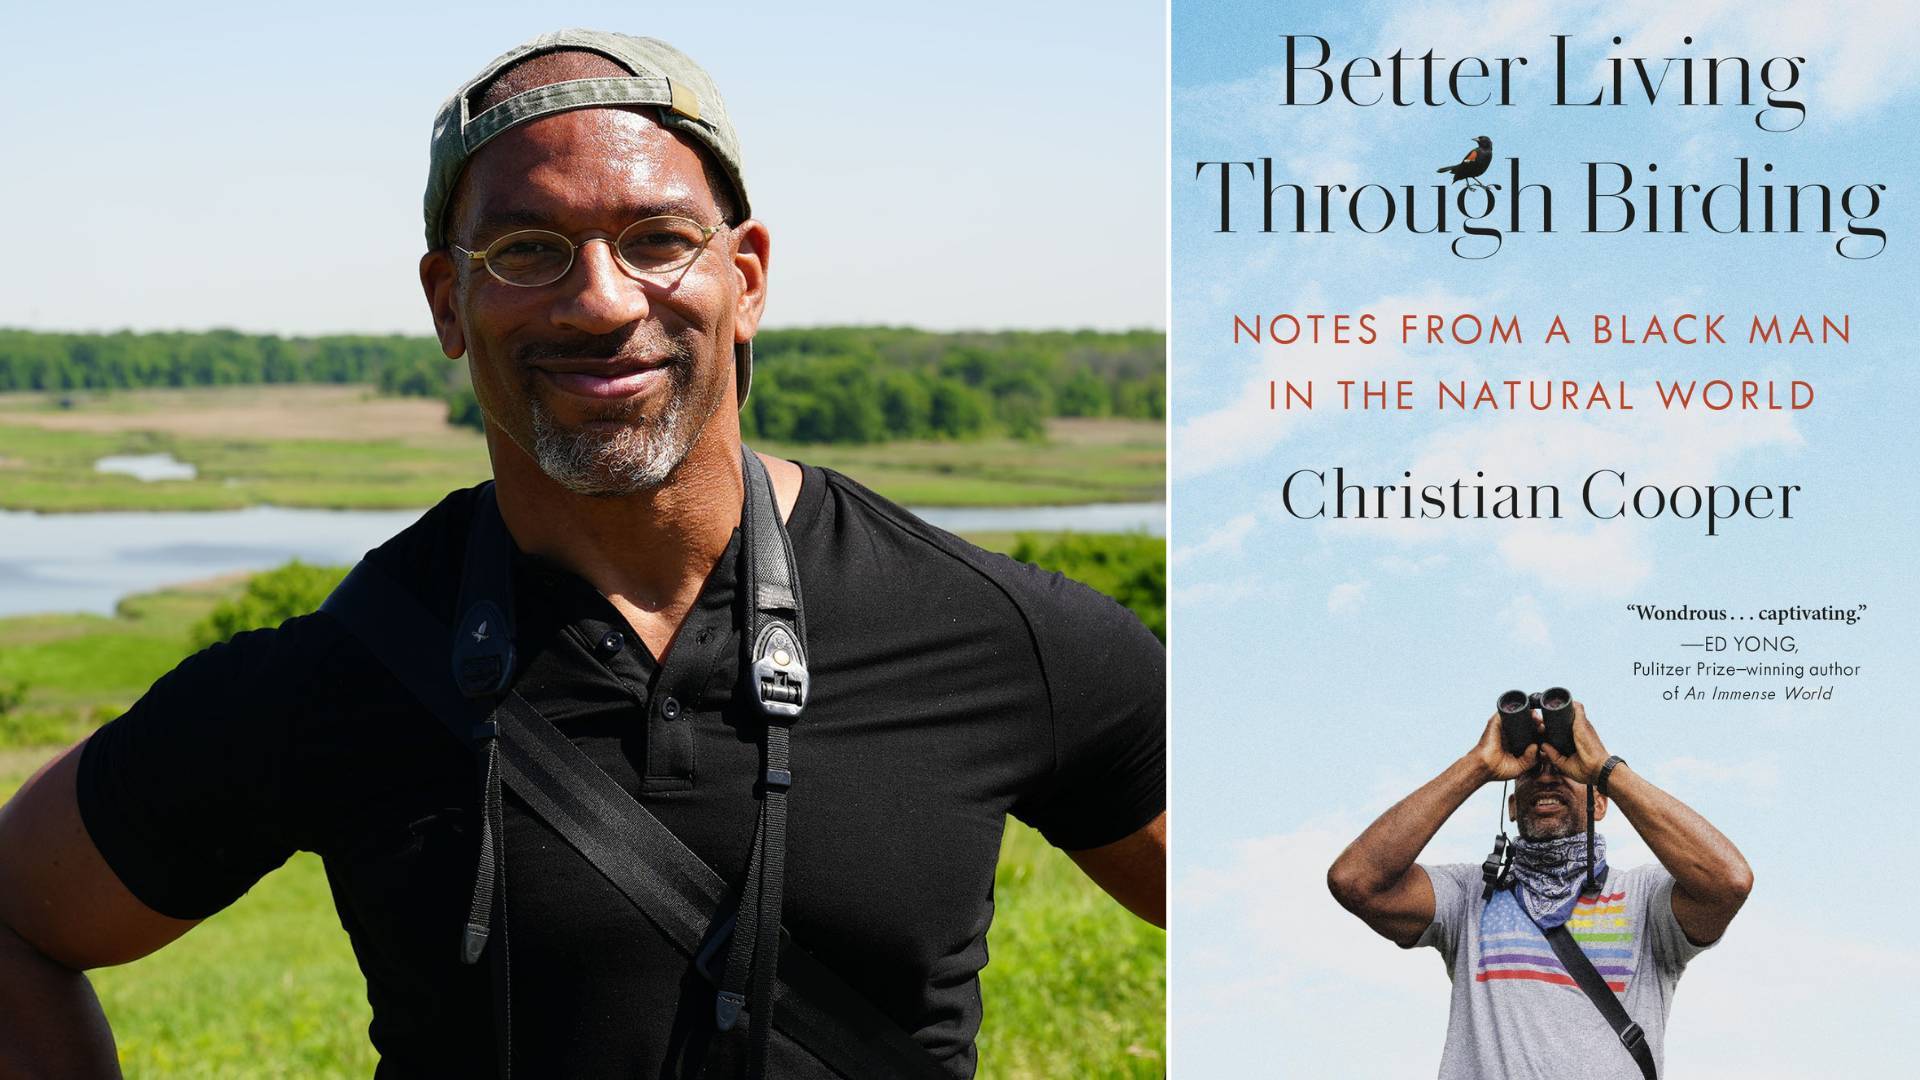 "Better Living Through Birding": Christian Cooper on Birding While Black & the Central Park Incident